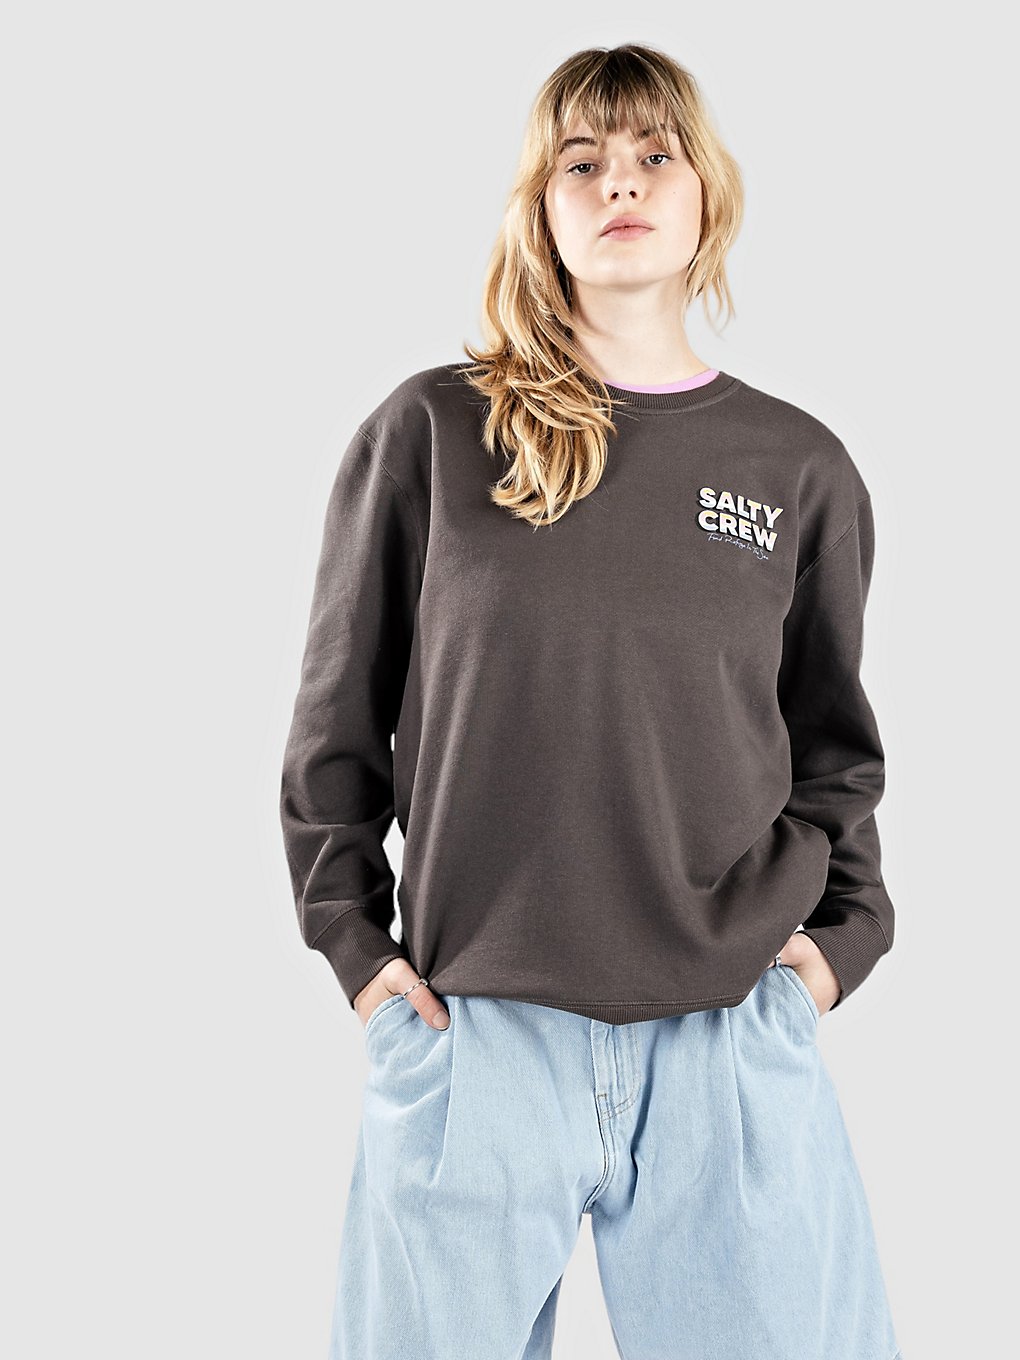 Salty Crew Summertime Premium Sweater faded black kaufen